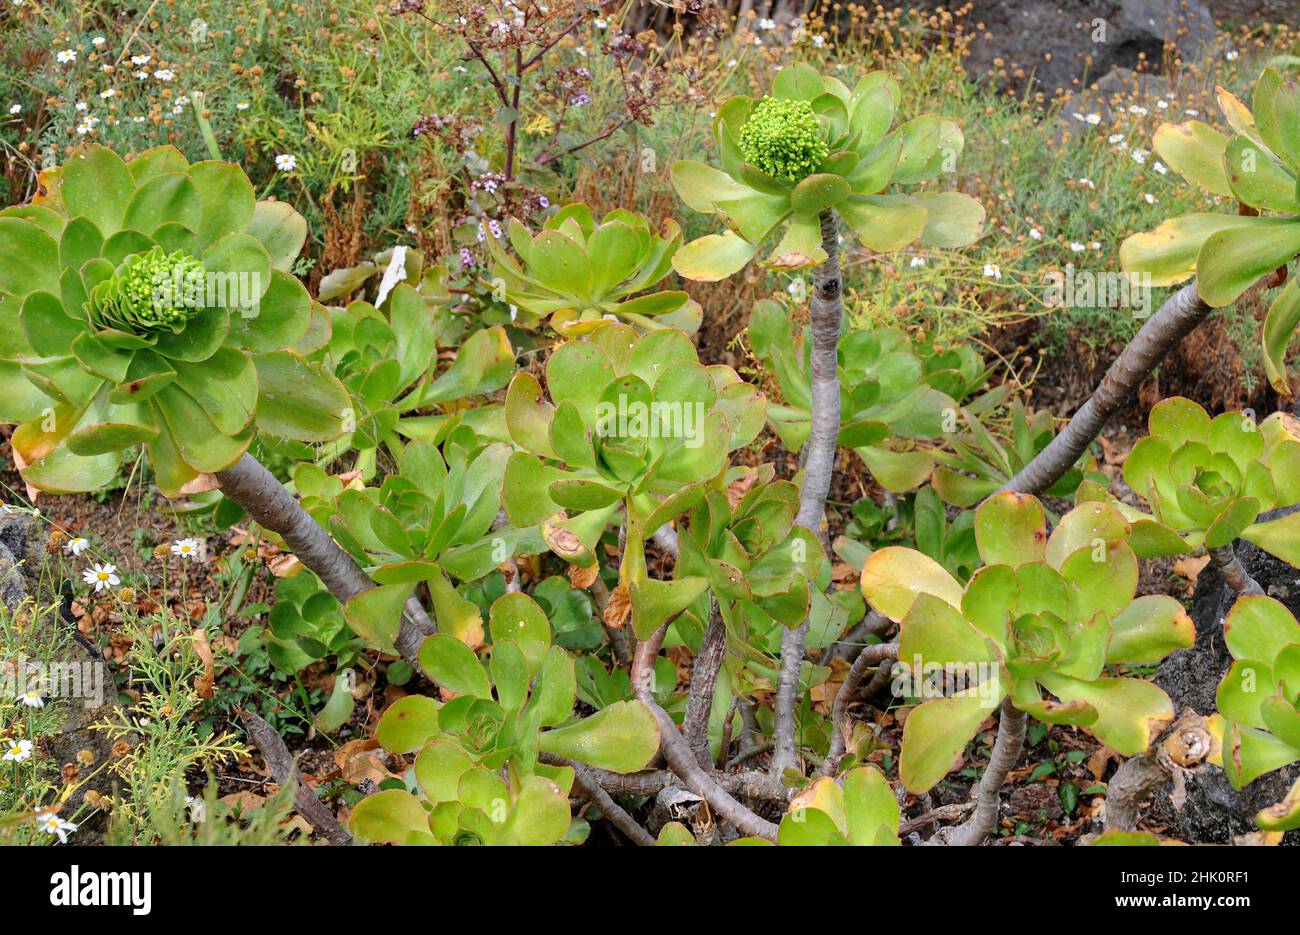 Bejeque de Gran Canaria (Aeonium undulatum) is a succulent shrub endemic to Gran Canaria, Canary Islands, Spain. Stock Photo